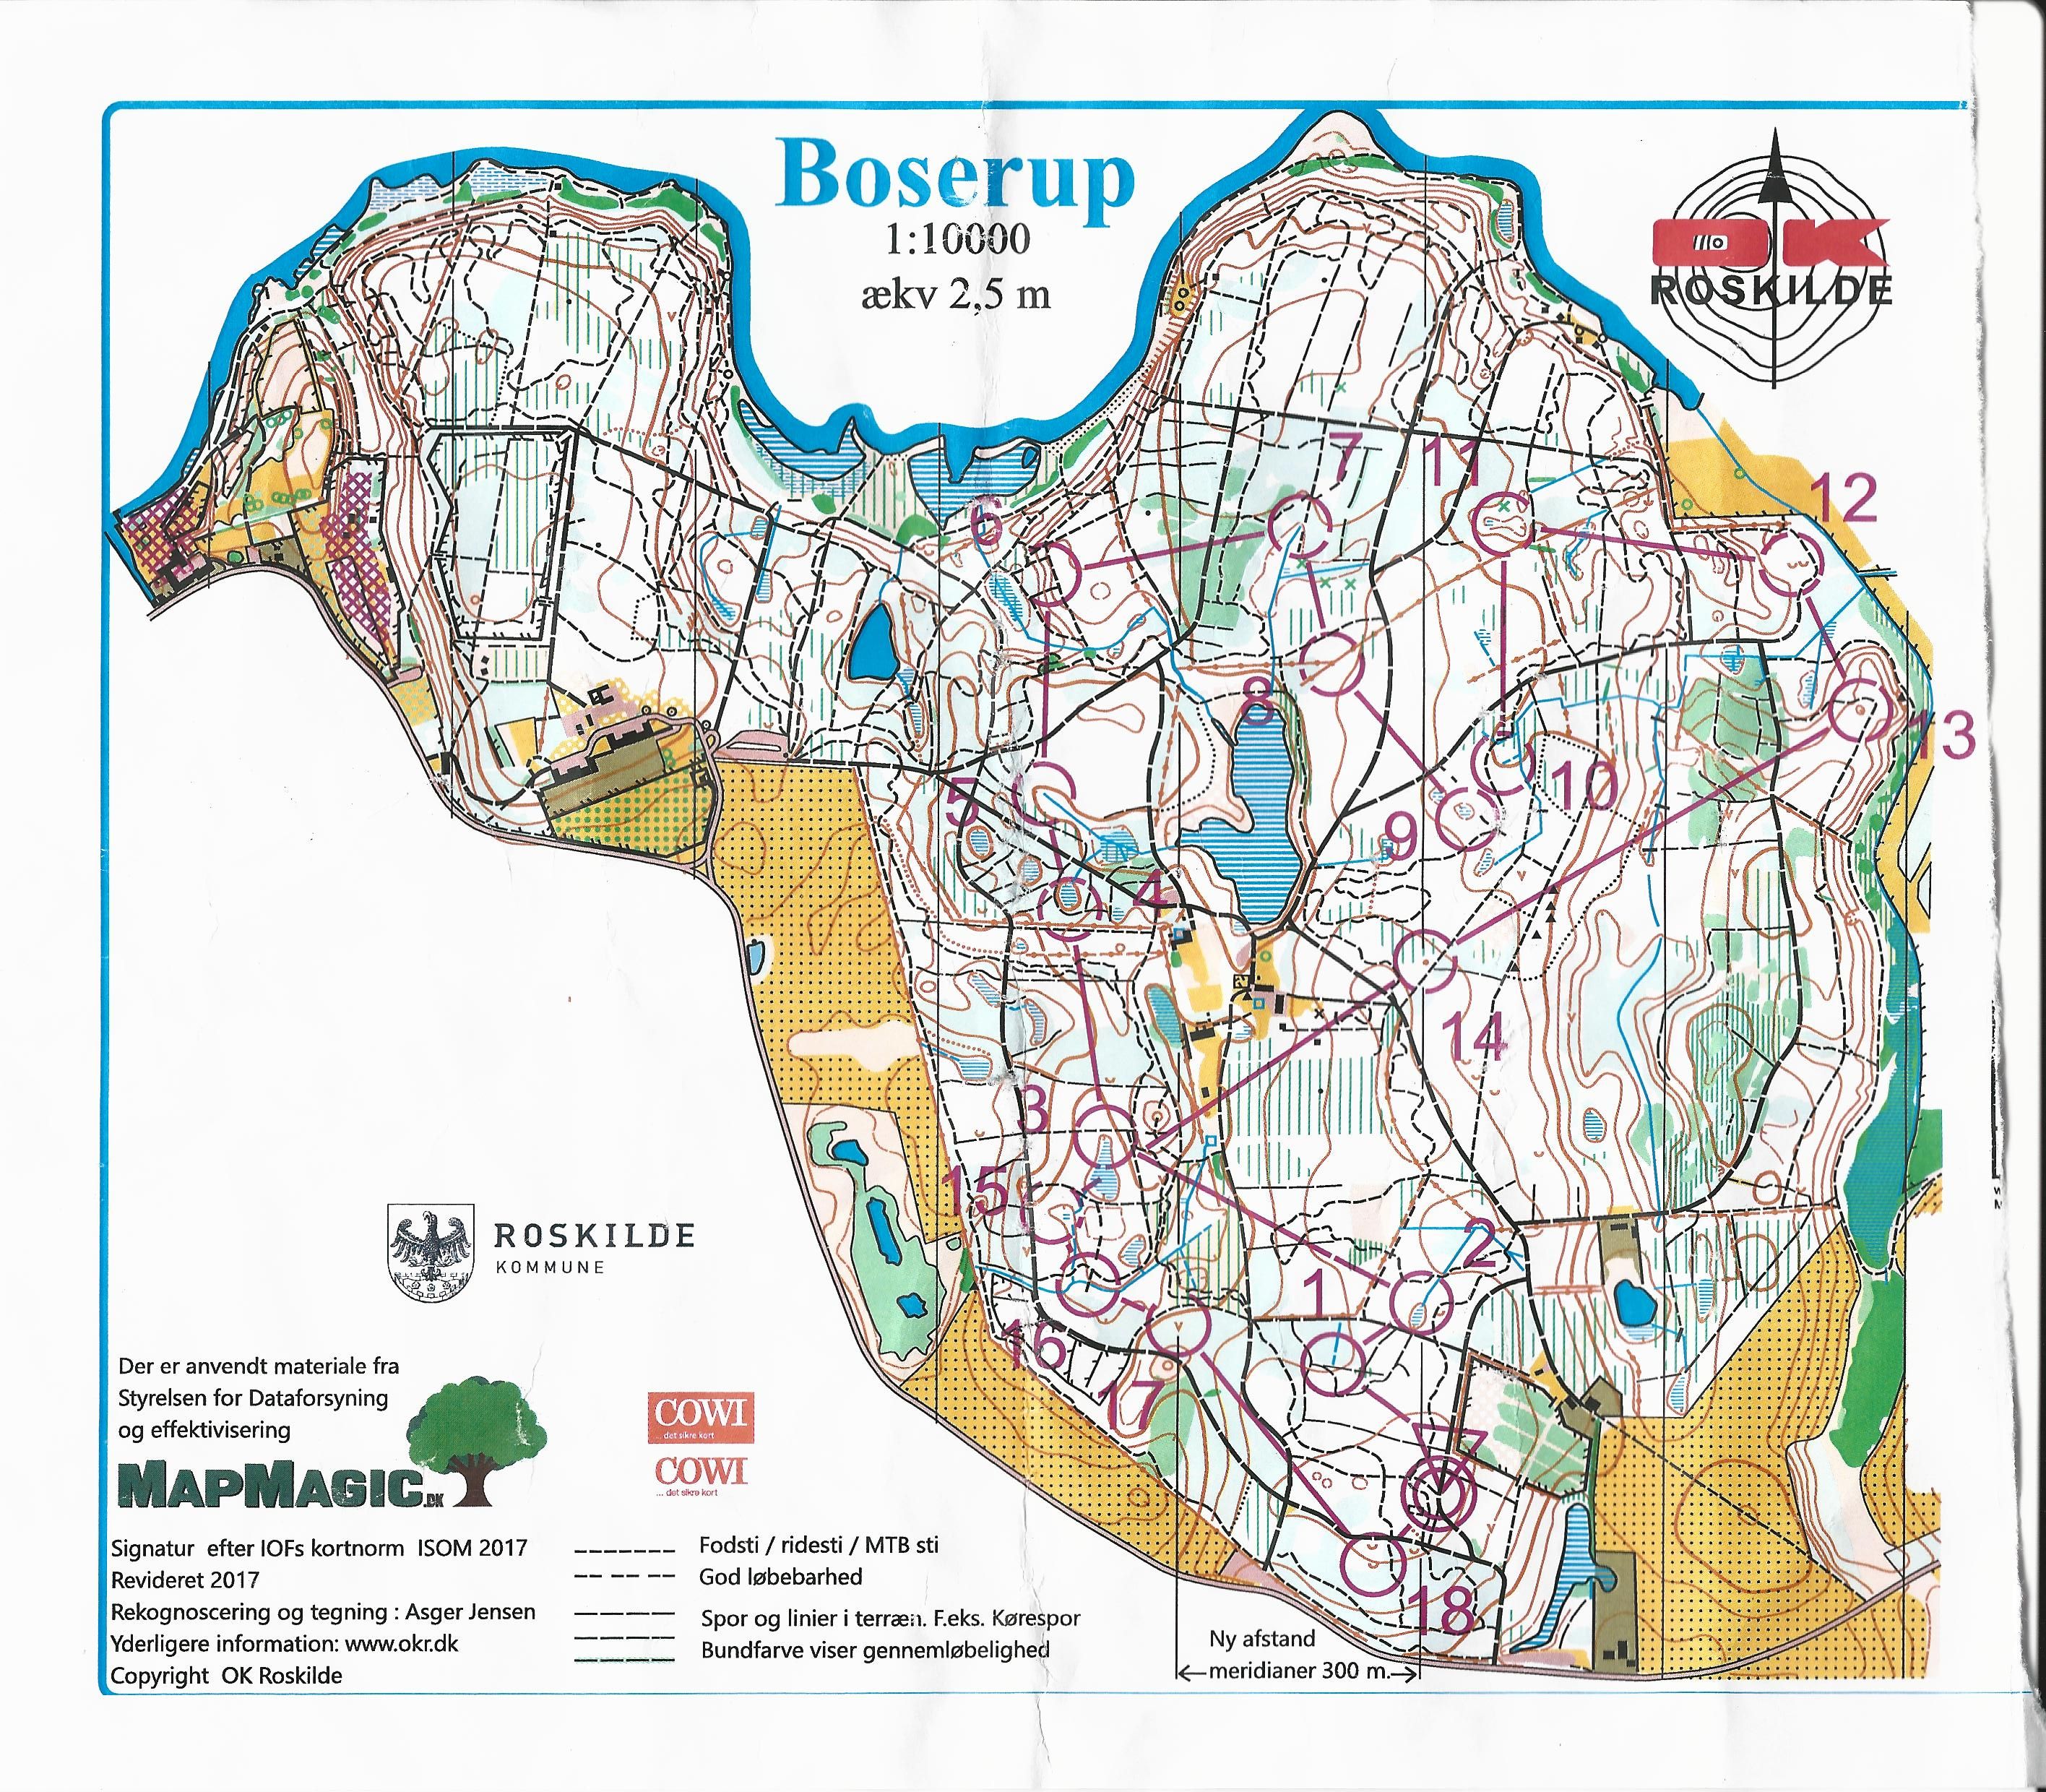 Mellemdistance-træning, Boserup (24/05/2021)